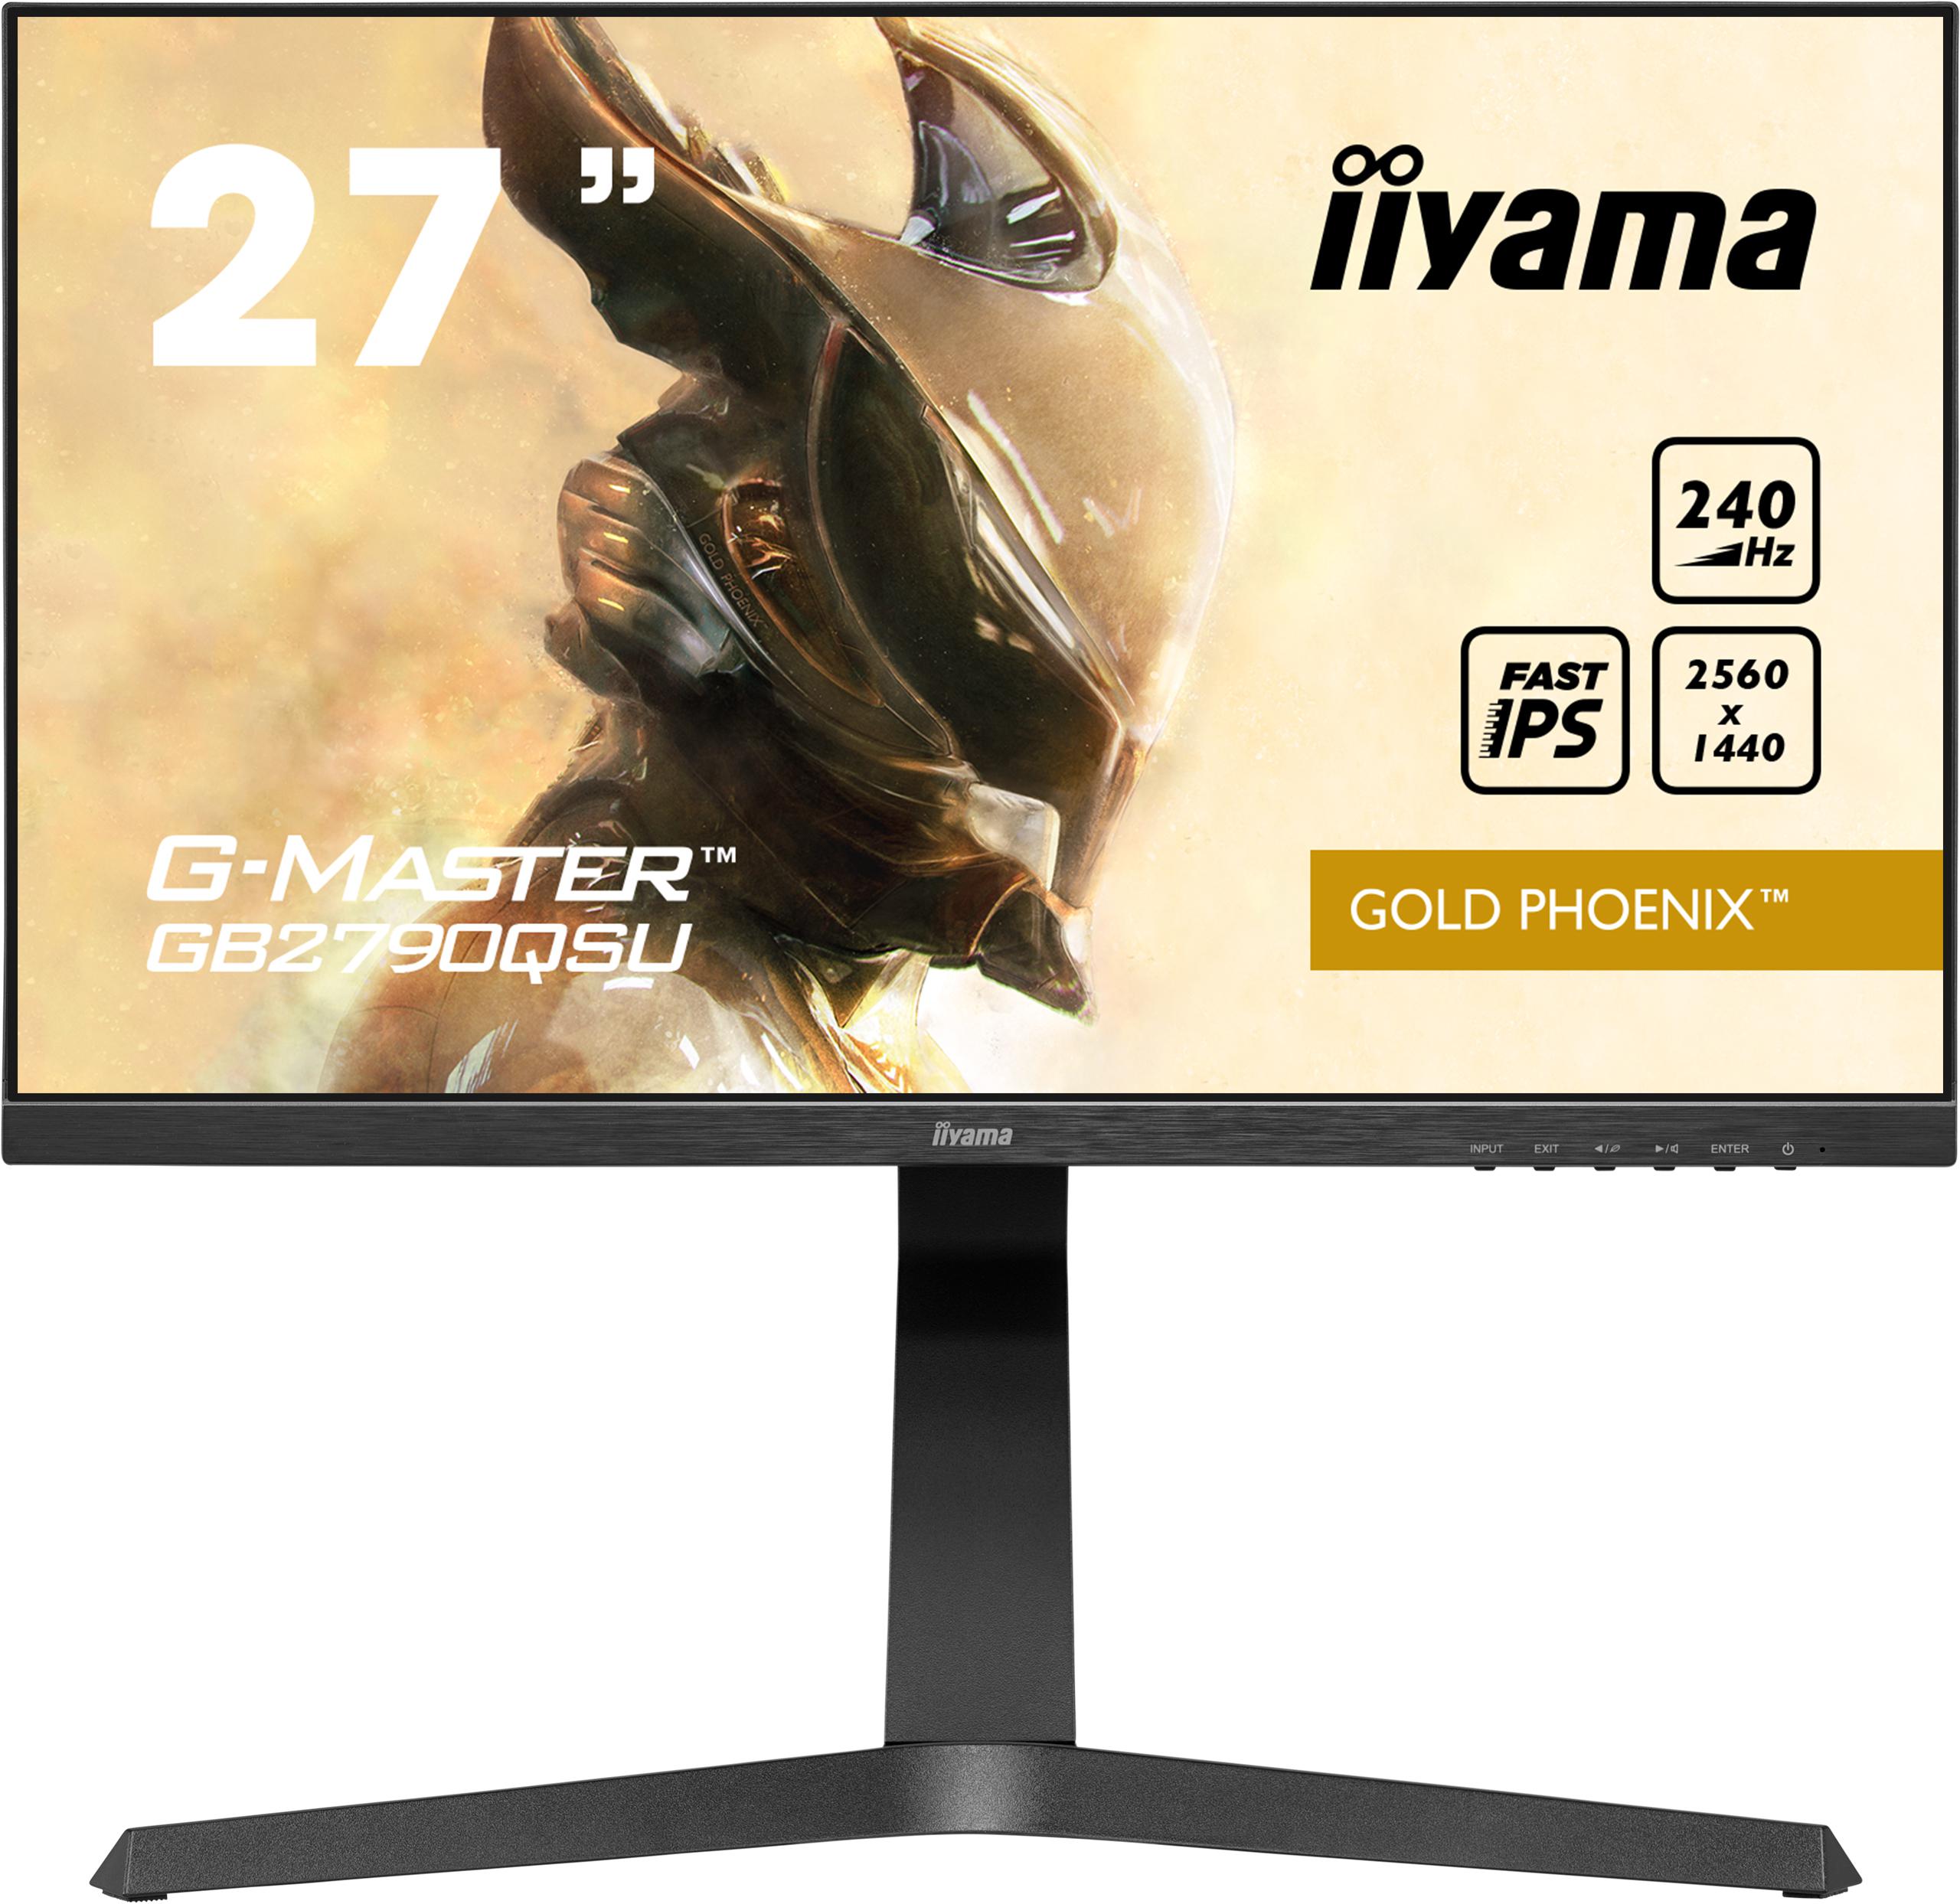 Iiyama - Monitor Iiyama 27" G-MASTER GB2790QSU-B1 Gold Phoenix WQHD 240Hz FreeSync Premium